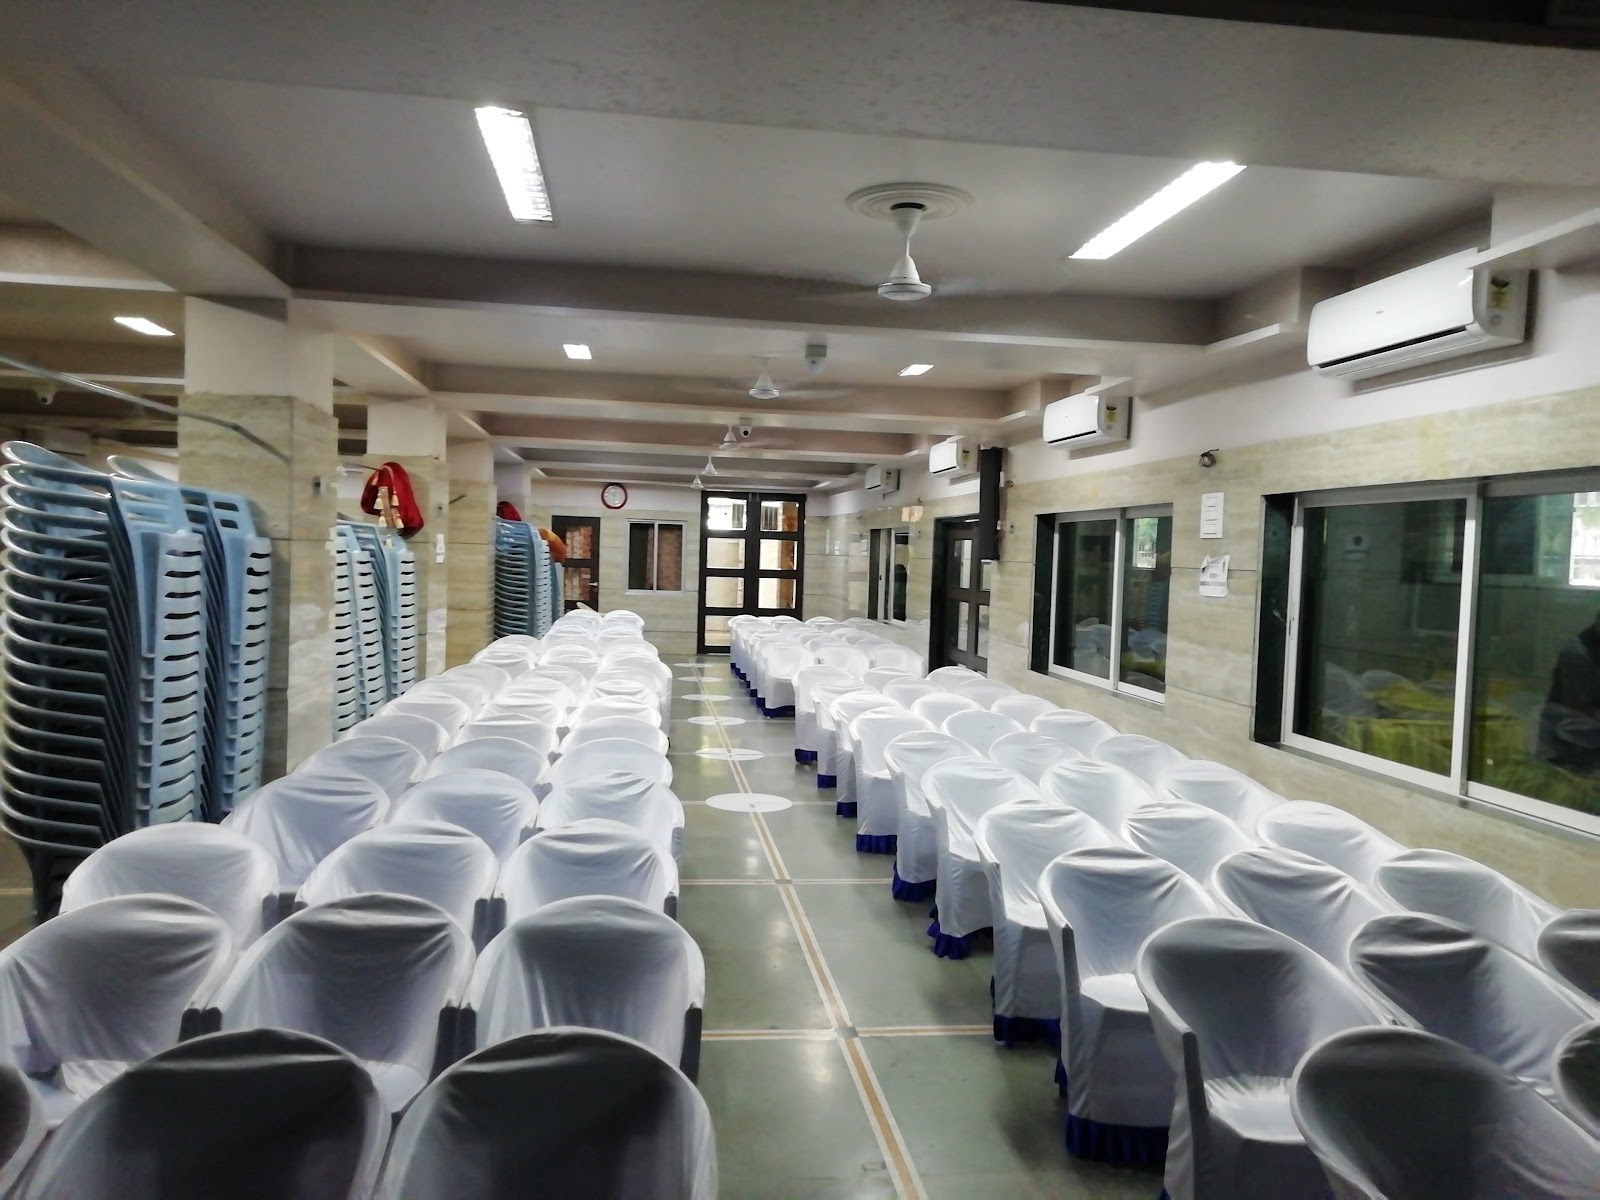 Sindhura Banquet Hall, Malkajgiri, Hyderabad - Review, Price, Availability